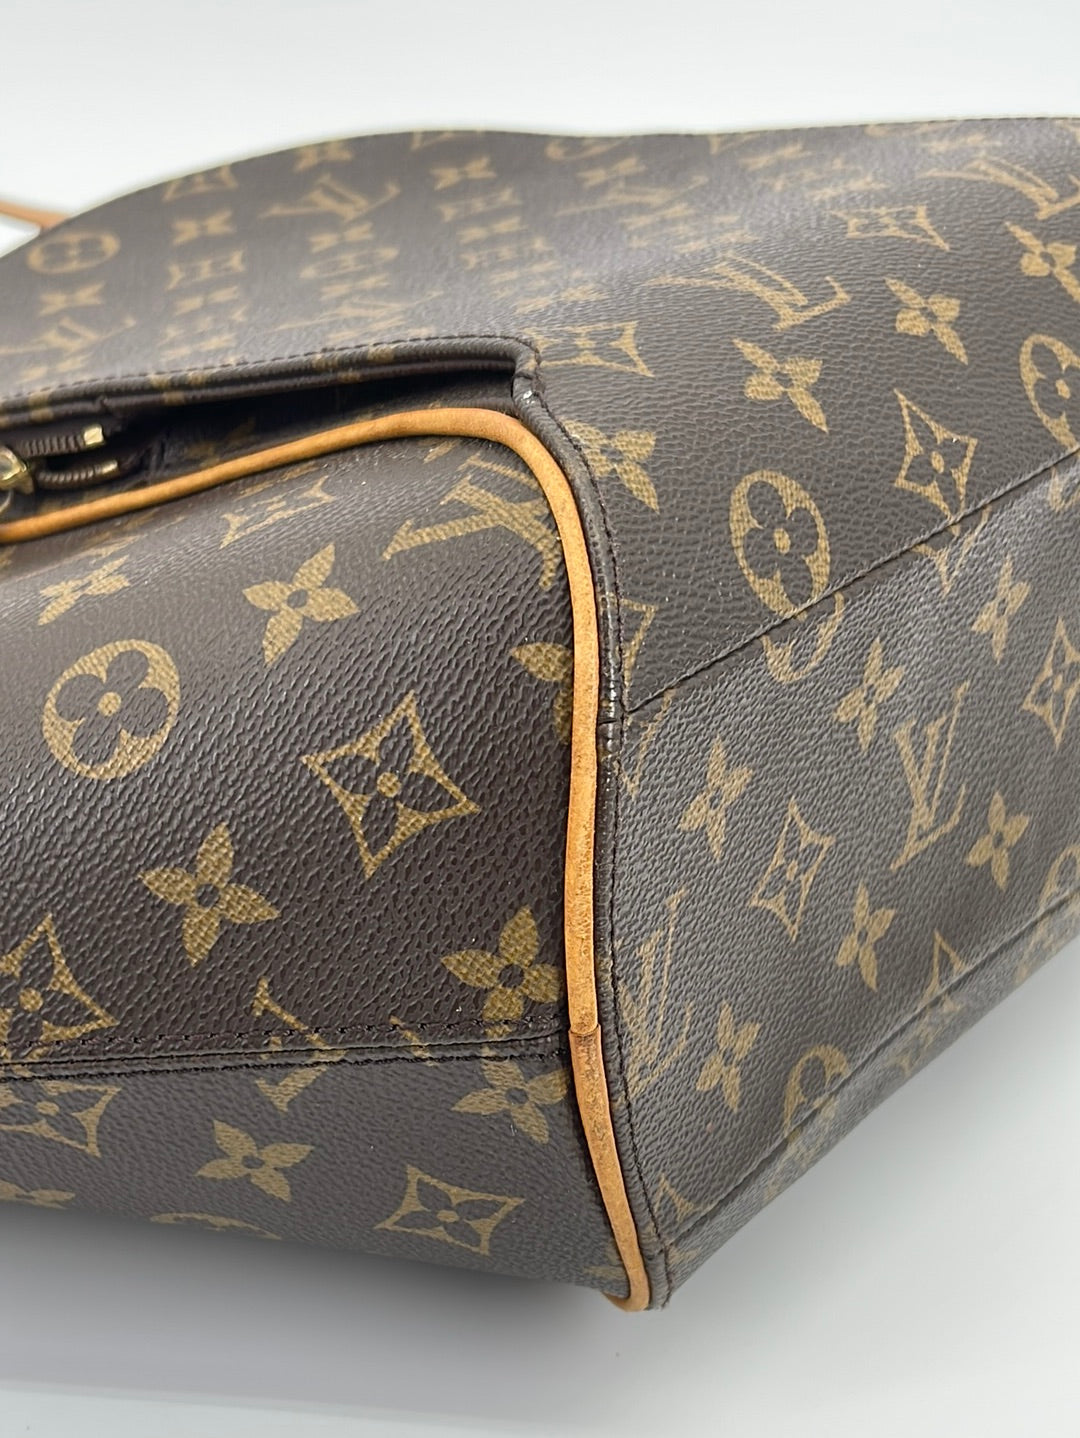 Louis Vuitton Ellipse Handbag 372722